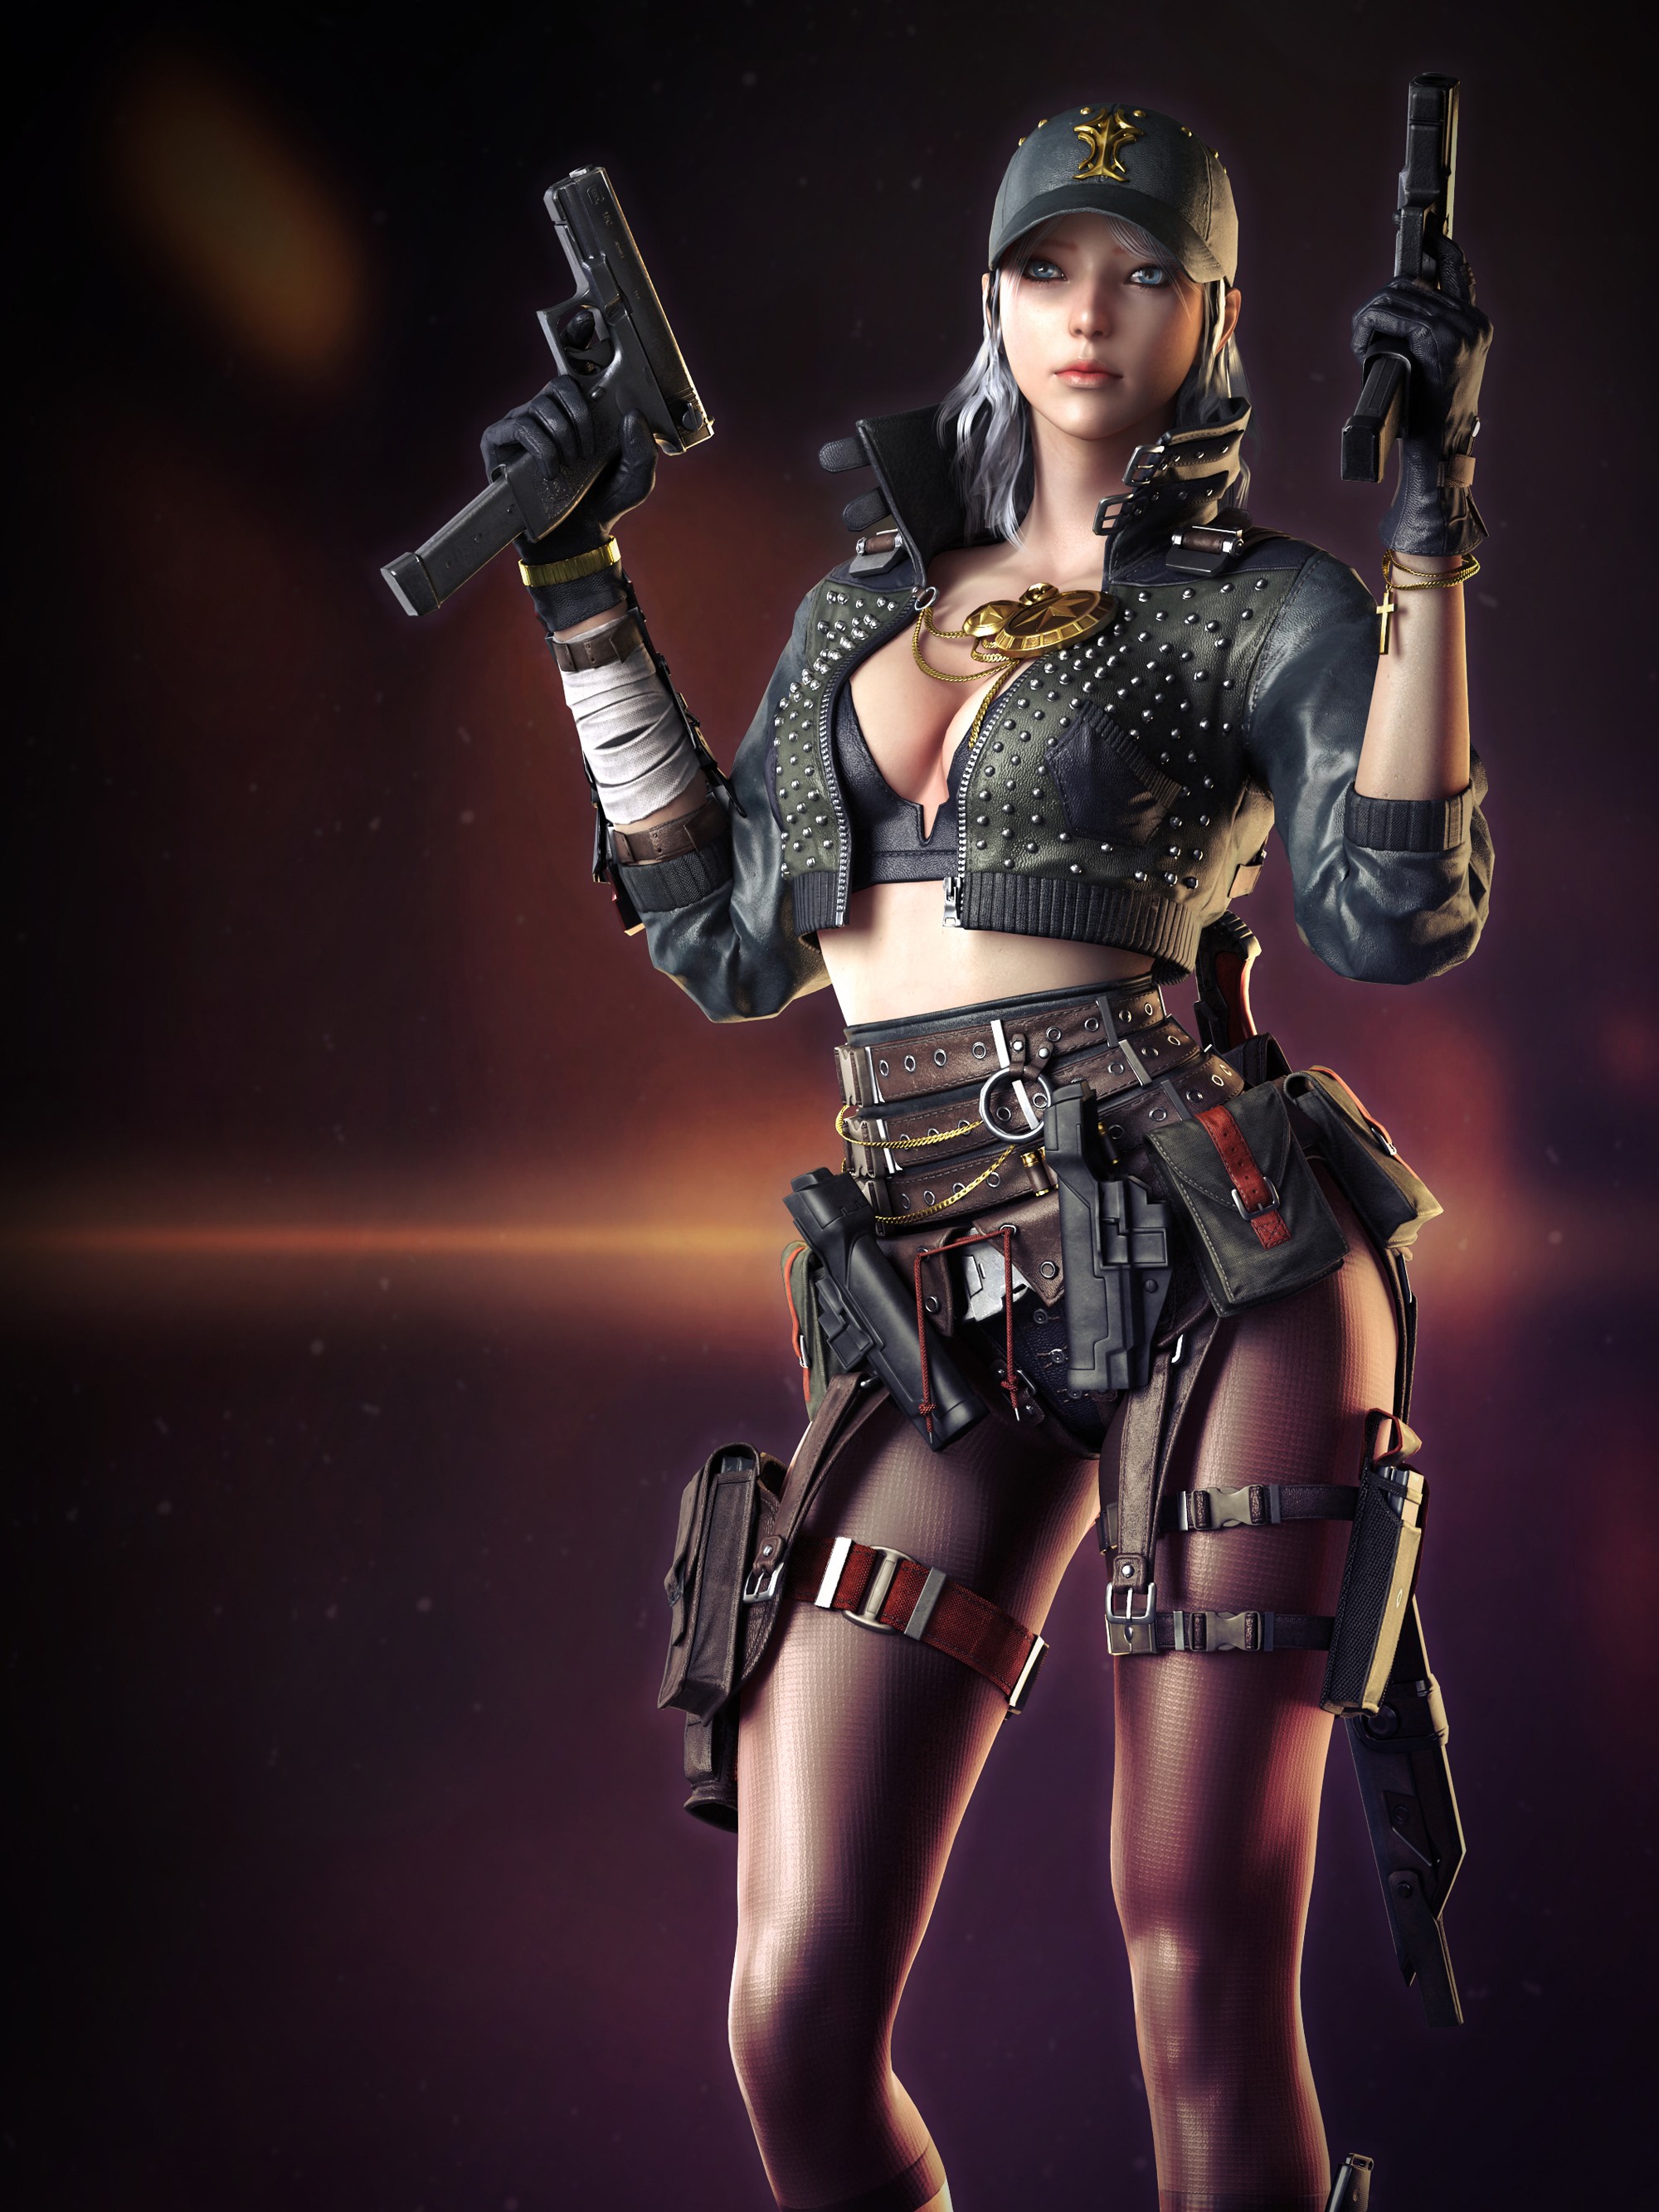 General 2000x2667 CrossFire PC gaming Glock 18 boobs panties gun video game girls women with weapons girls with guns bra black bras